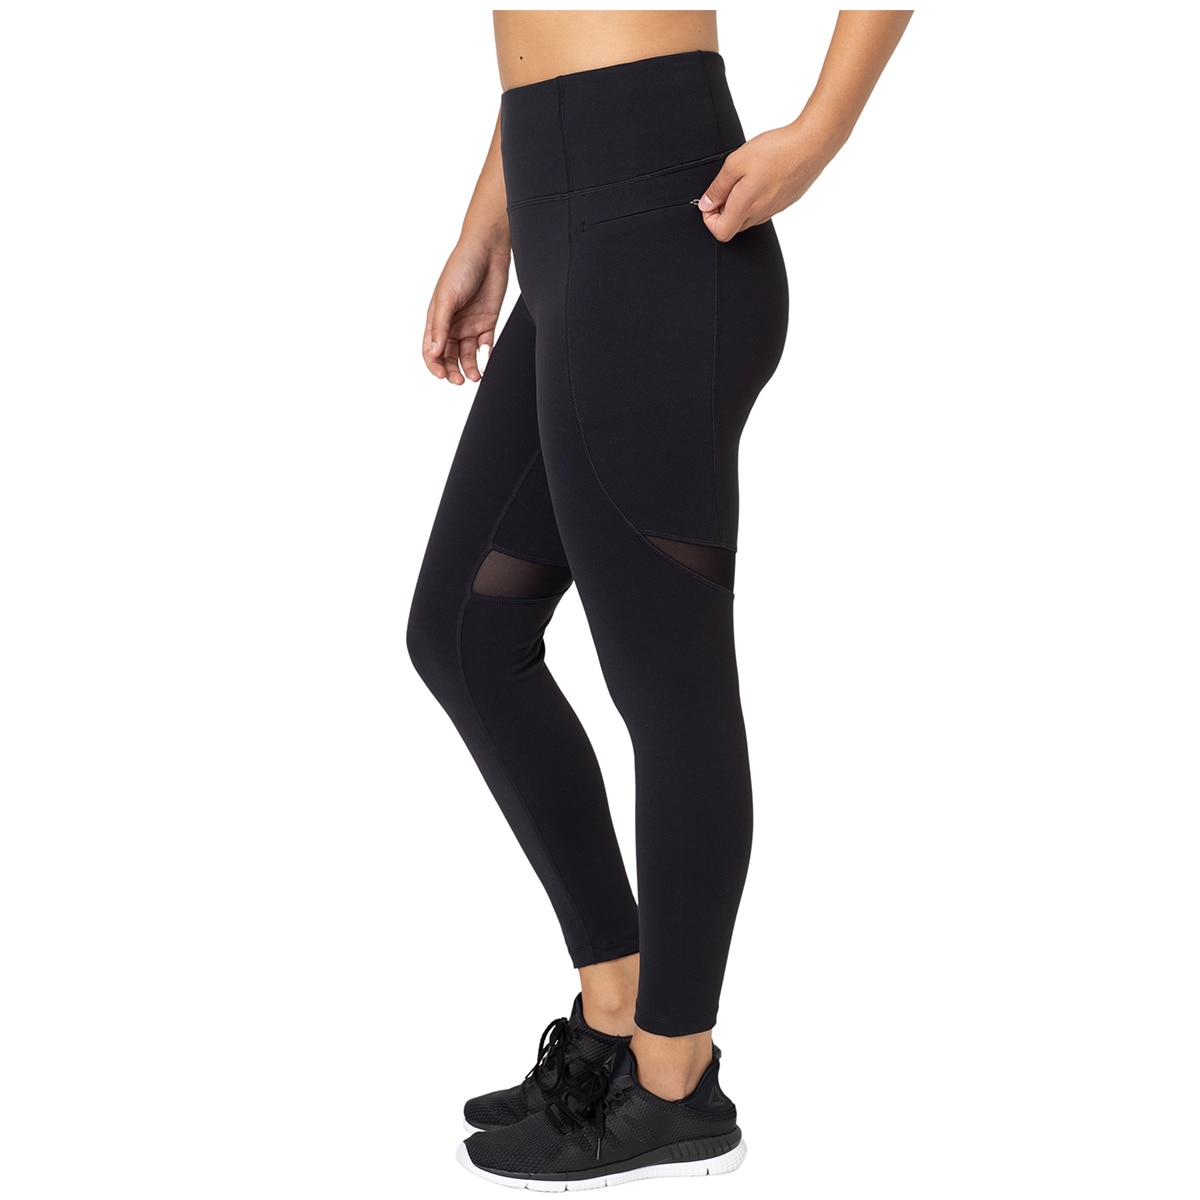 Tuff Athletics XL Grey Nylon/Polyester/Spandex Yoga Pants with Zipper Pocket